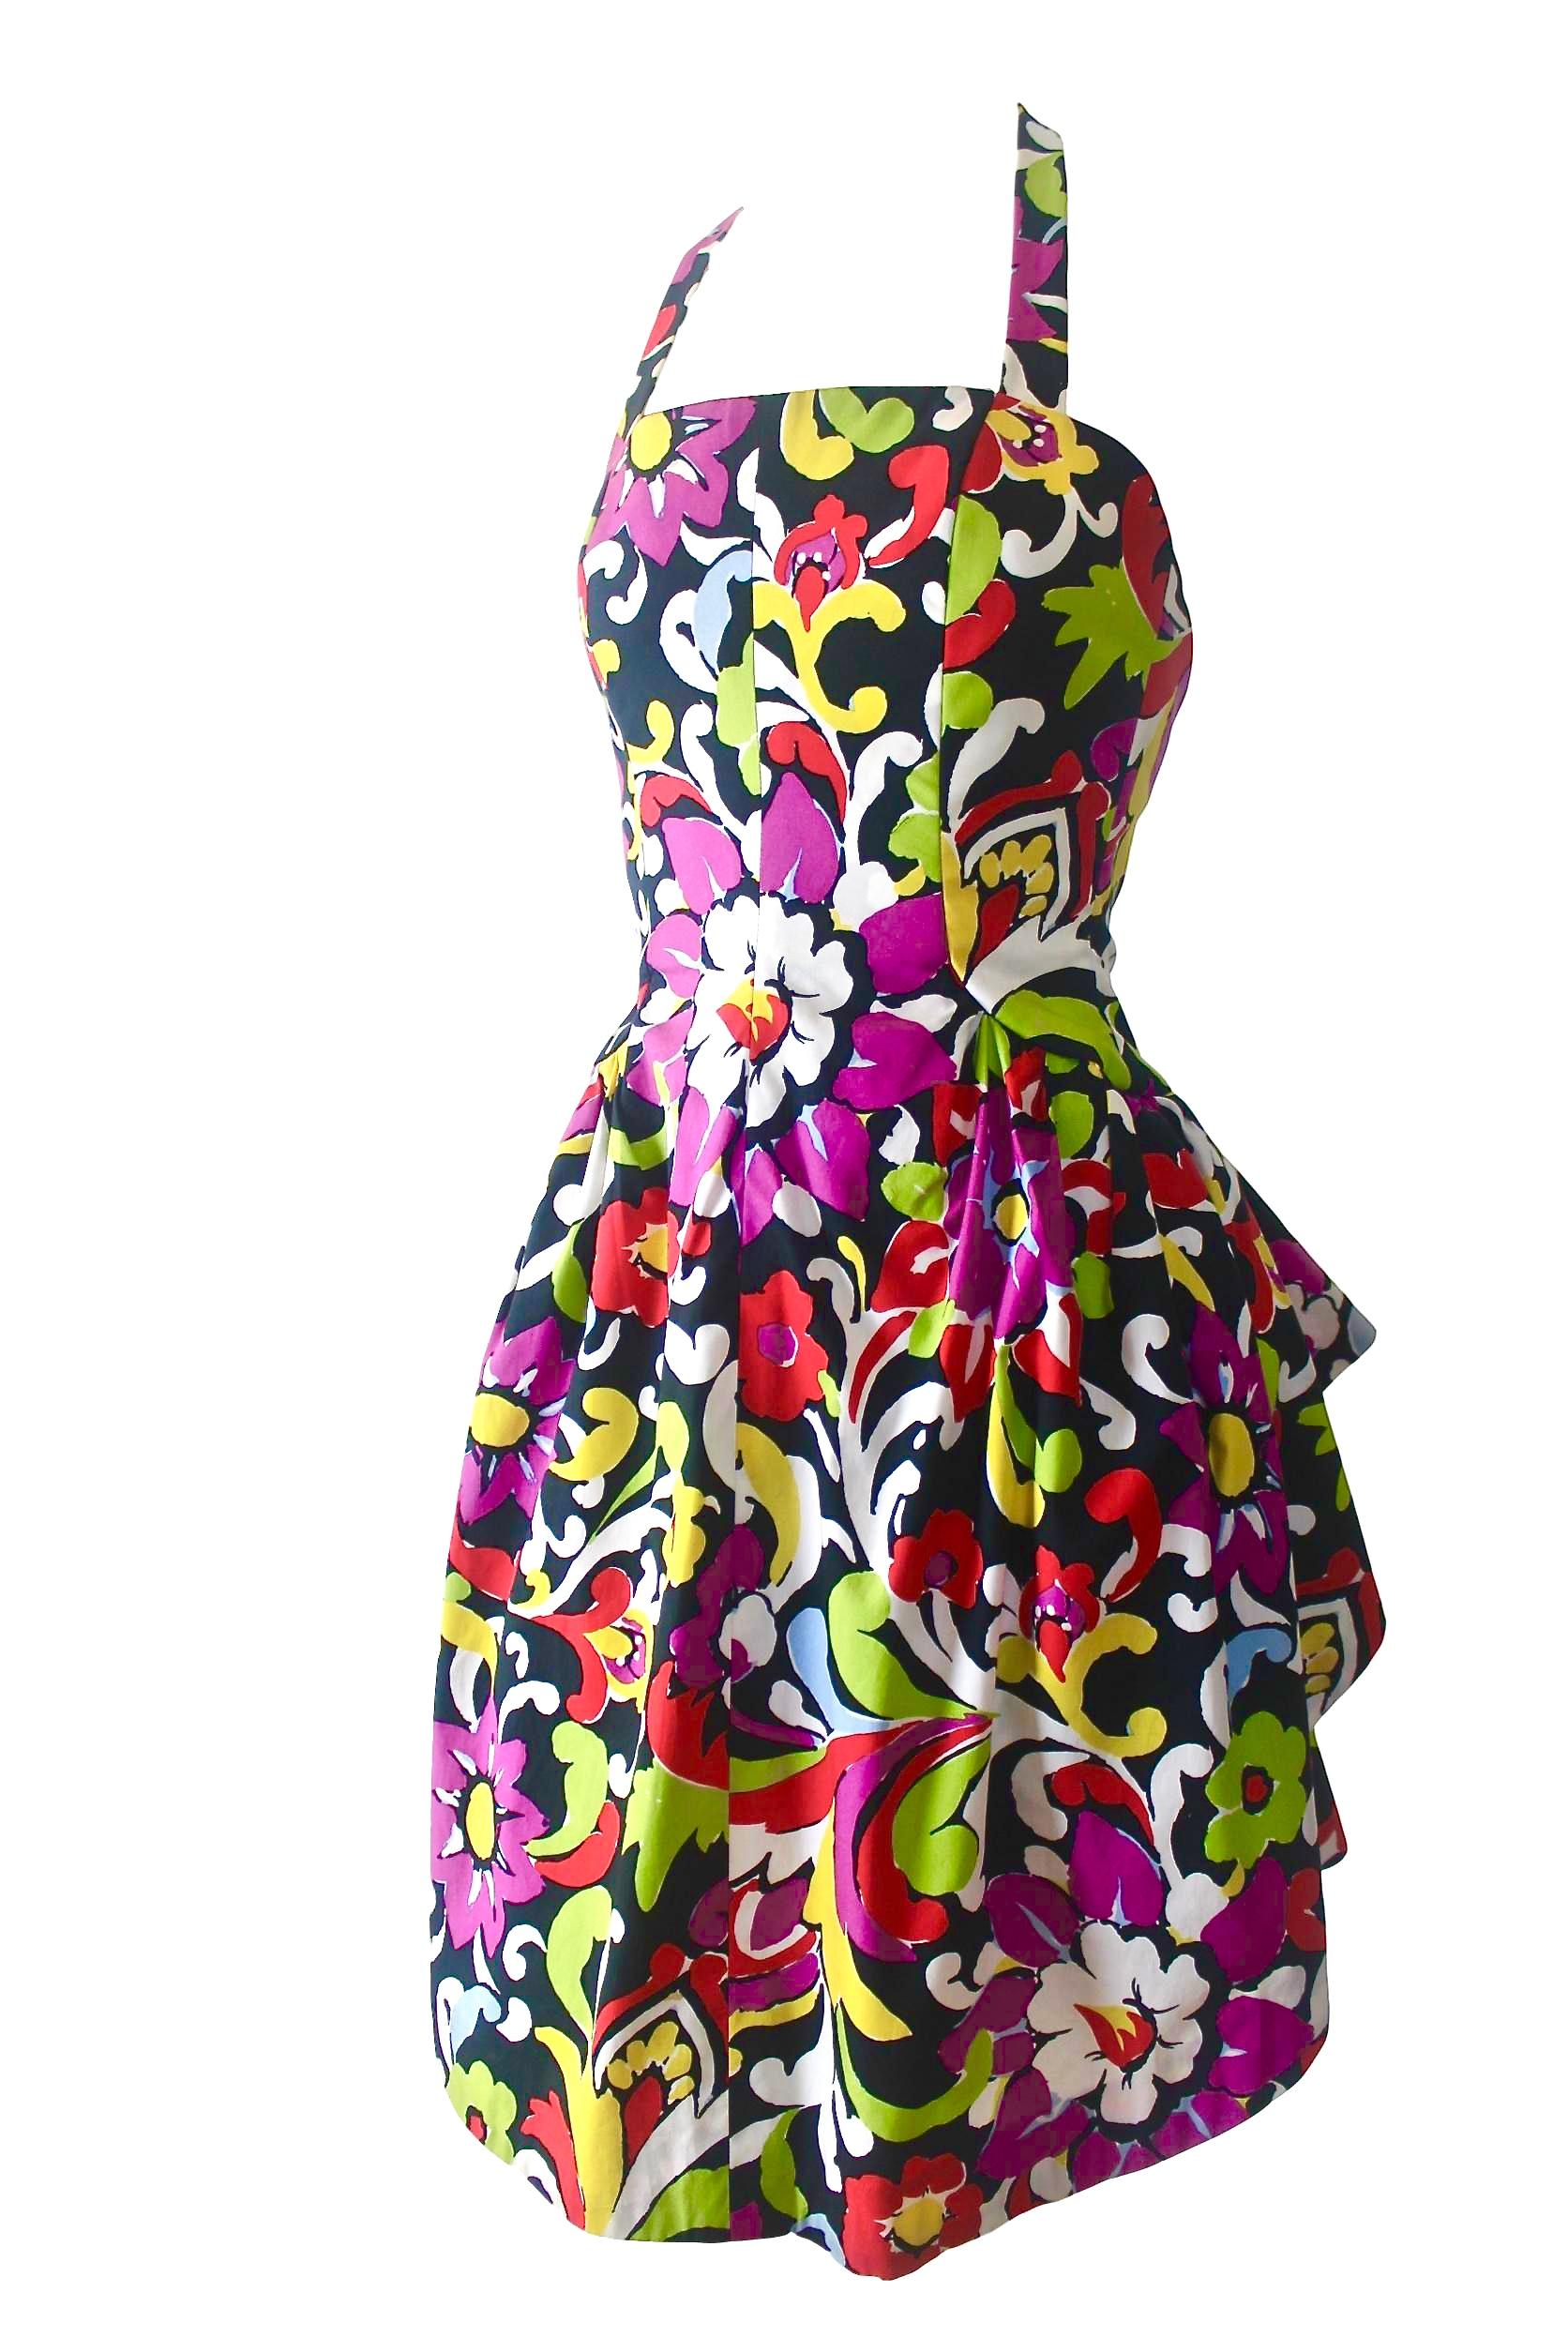 Christian Lacroix Floral Summer Pink Label Dress For Sale 1